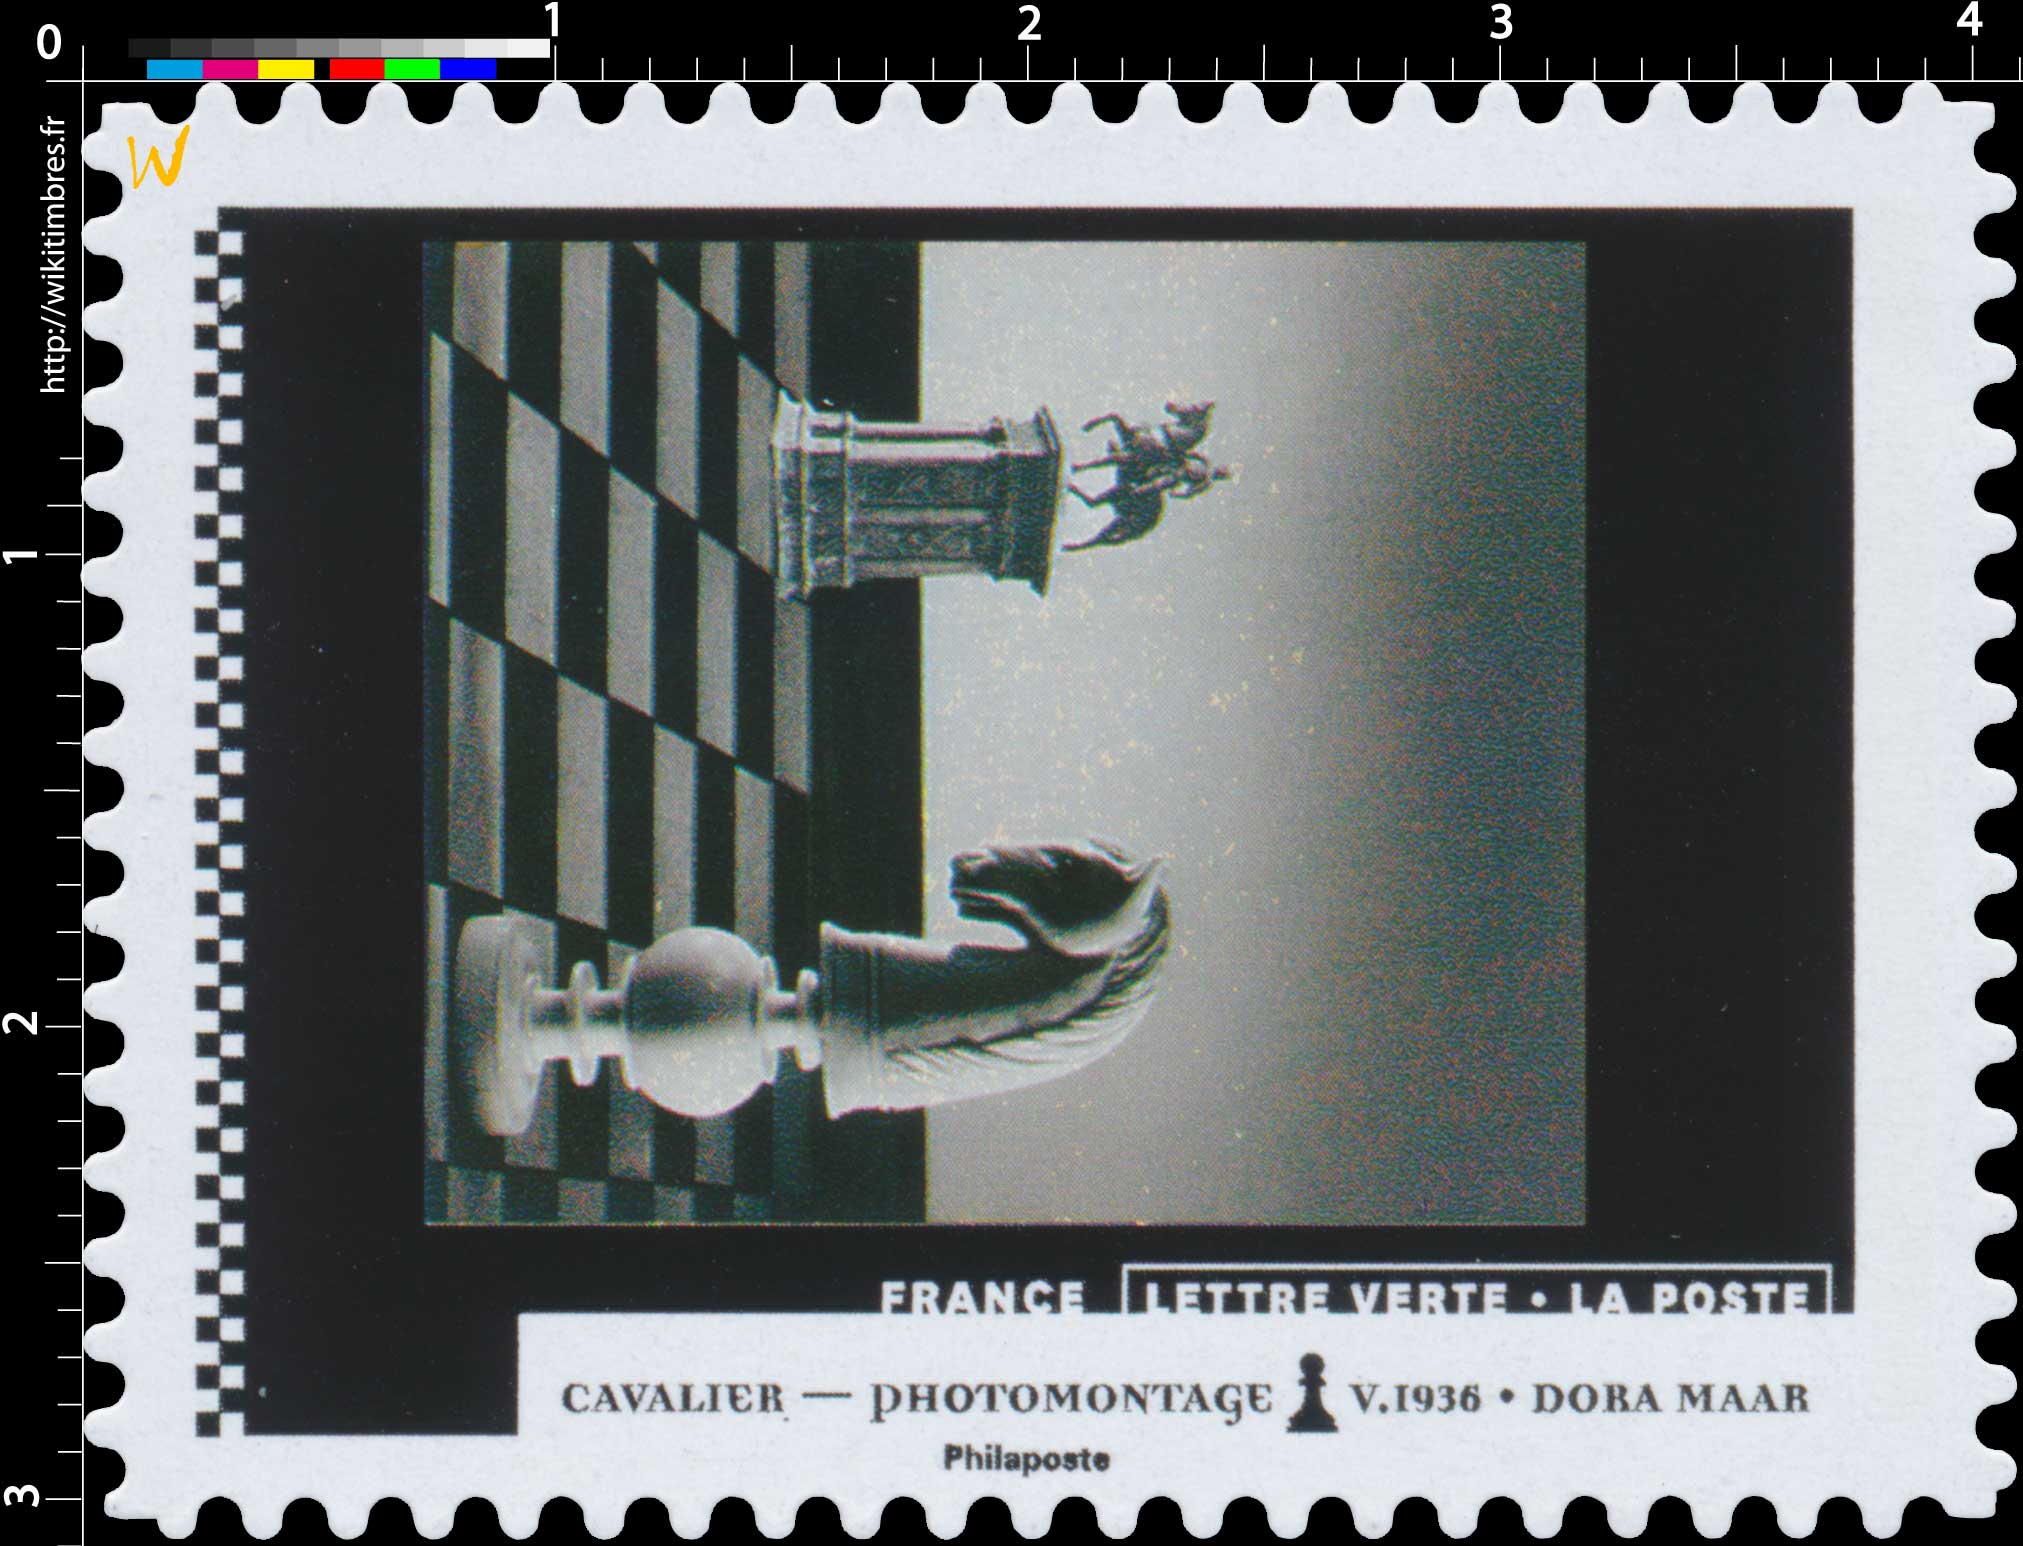 2021 Cavalier - Photomontage V.1936 - Dora Maar